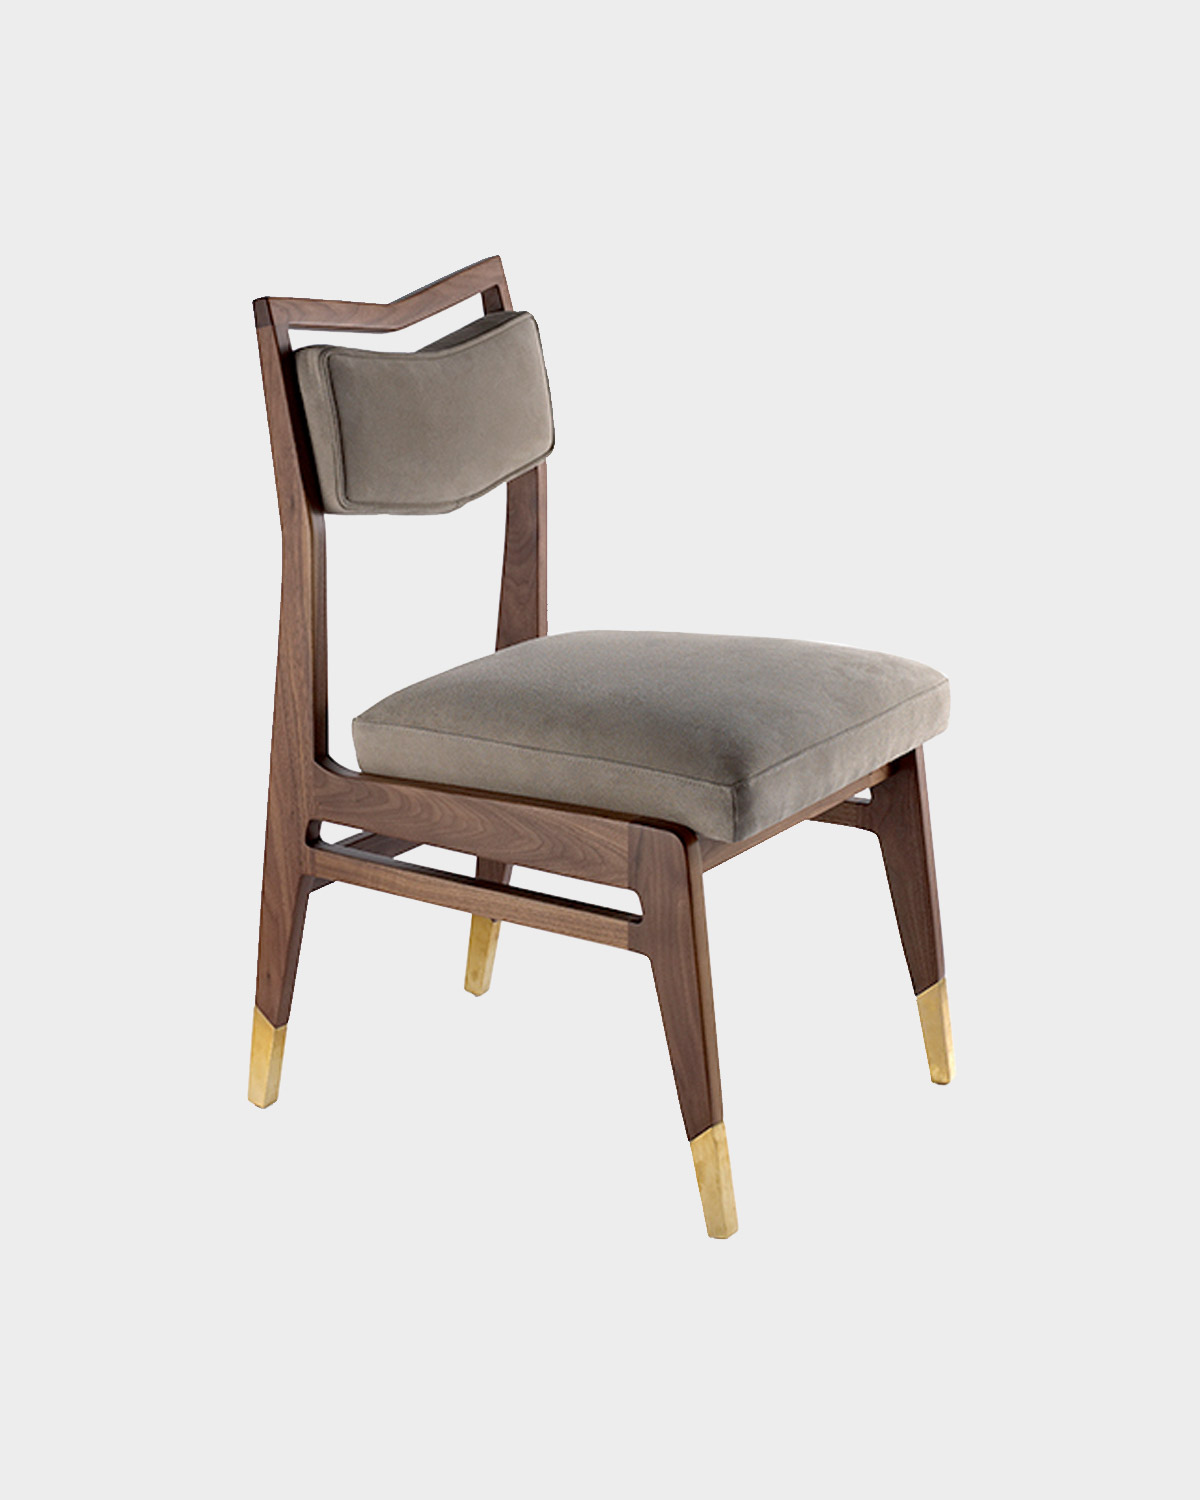 The Bruno Side Dining Chair by Studio Van den Akker